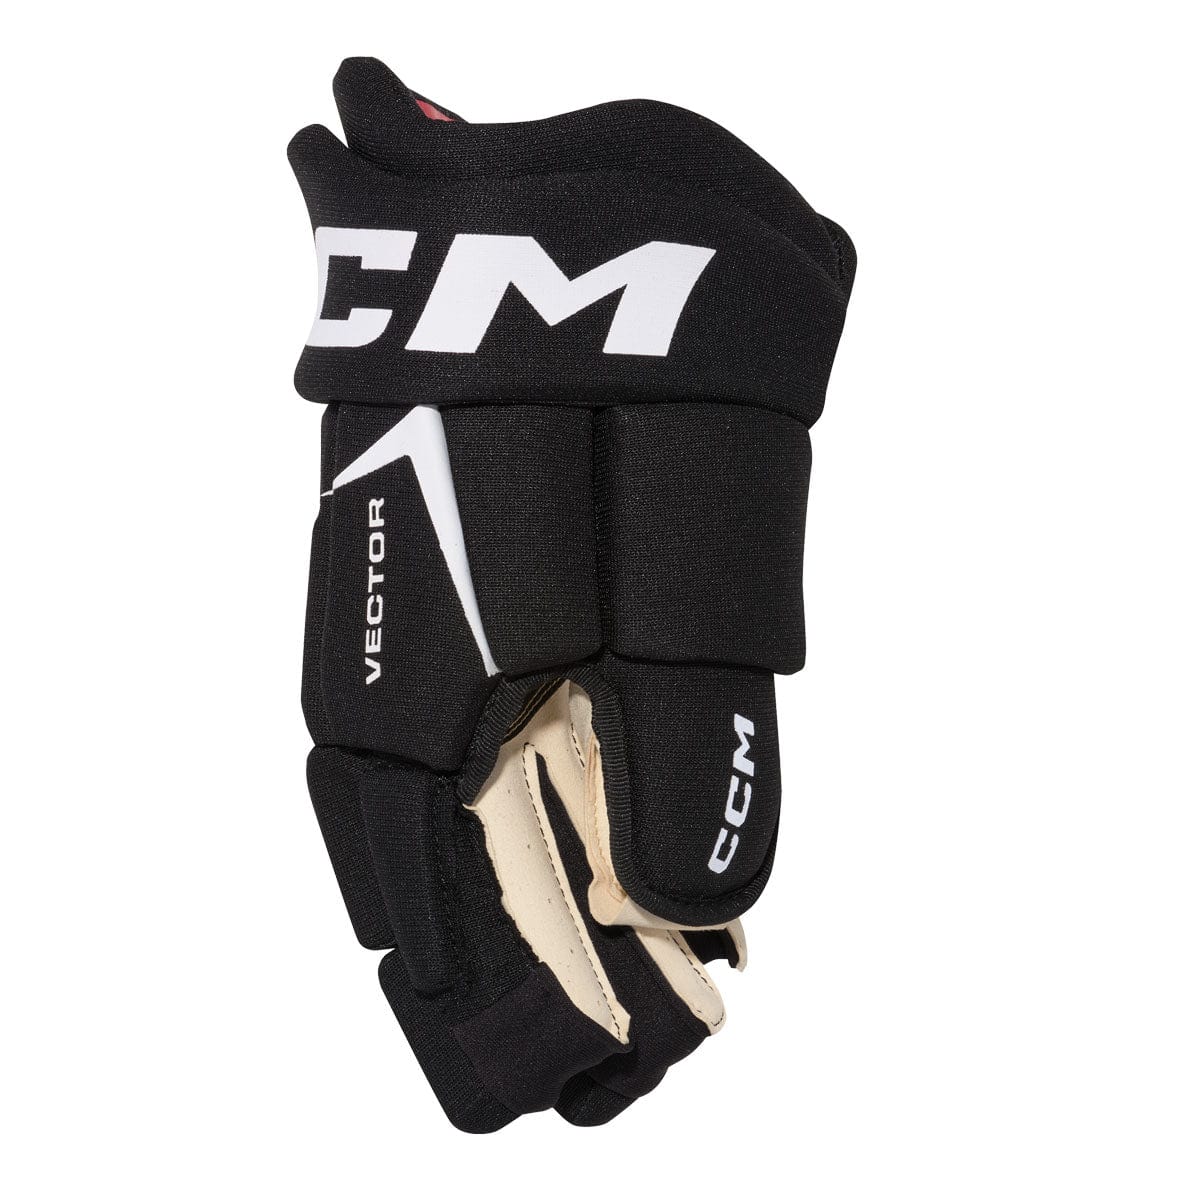 CCM Tacks Vector Senior Hockey Gloves - The Hockey Shop Source For Sports